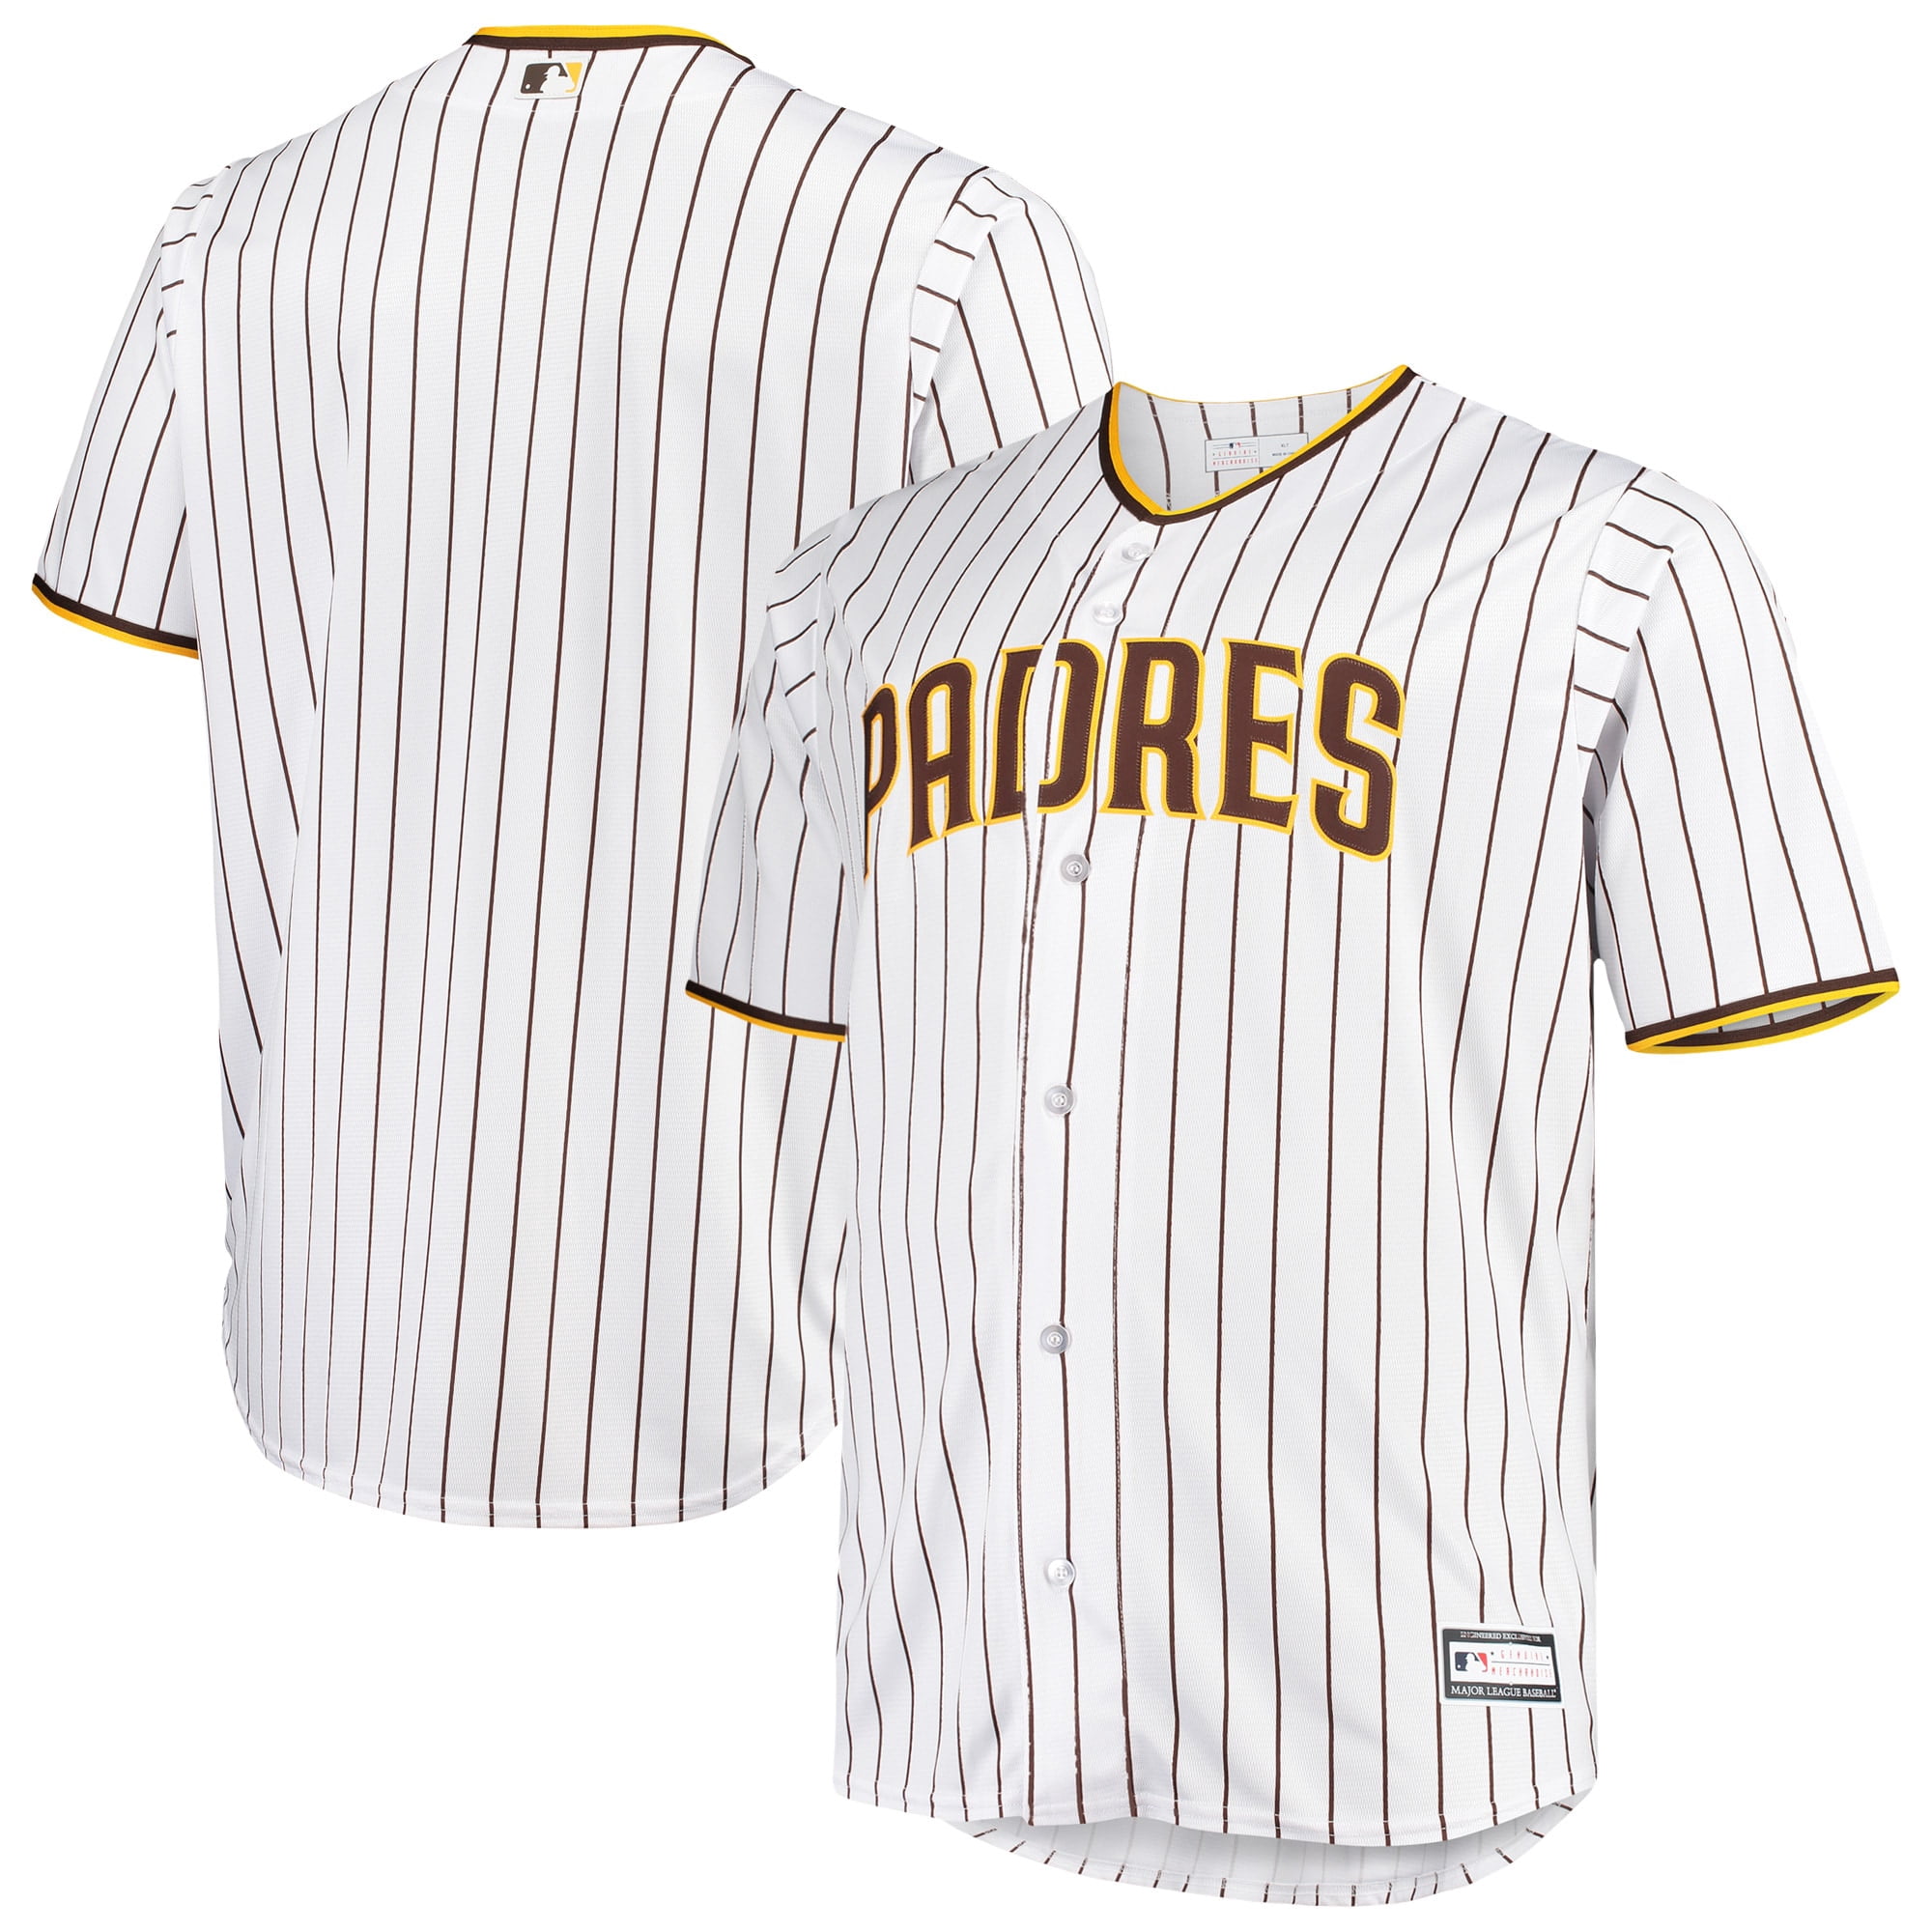 Official San Diego Padres Jerseys, Padres Baseball Jerseys, Uniforms